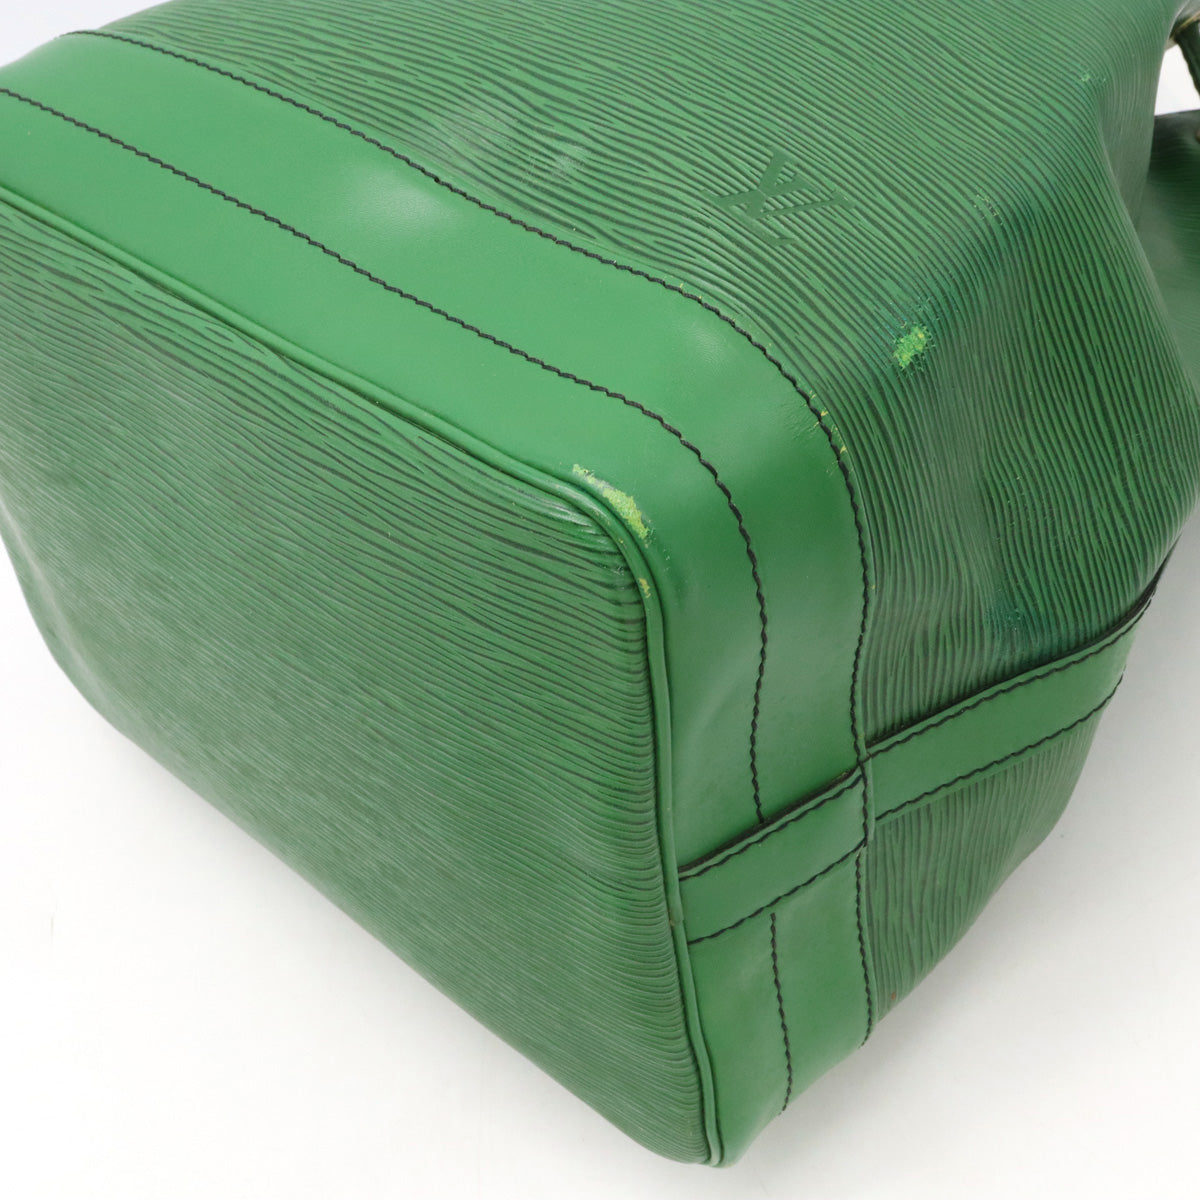 Louis Vuitton Green Epi Leather Borneo Noe Drawstring Bucket Hobo